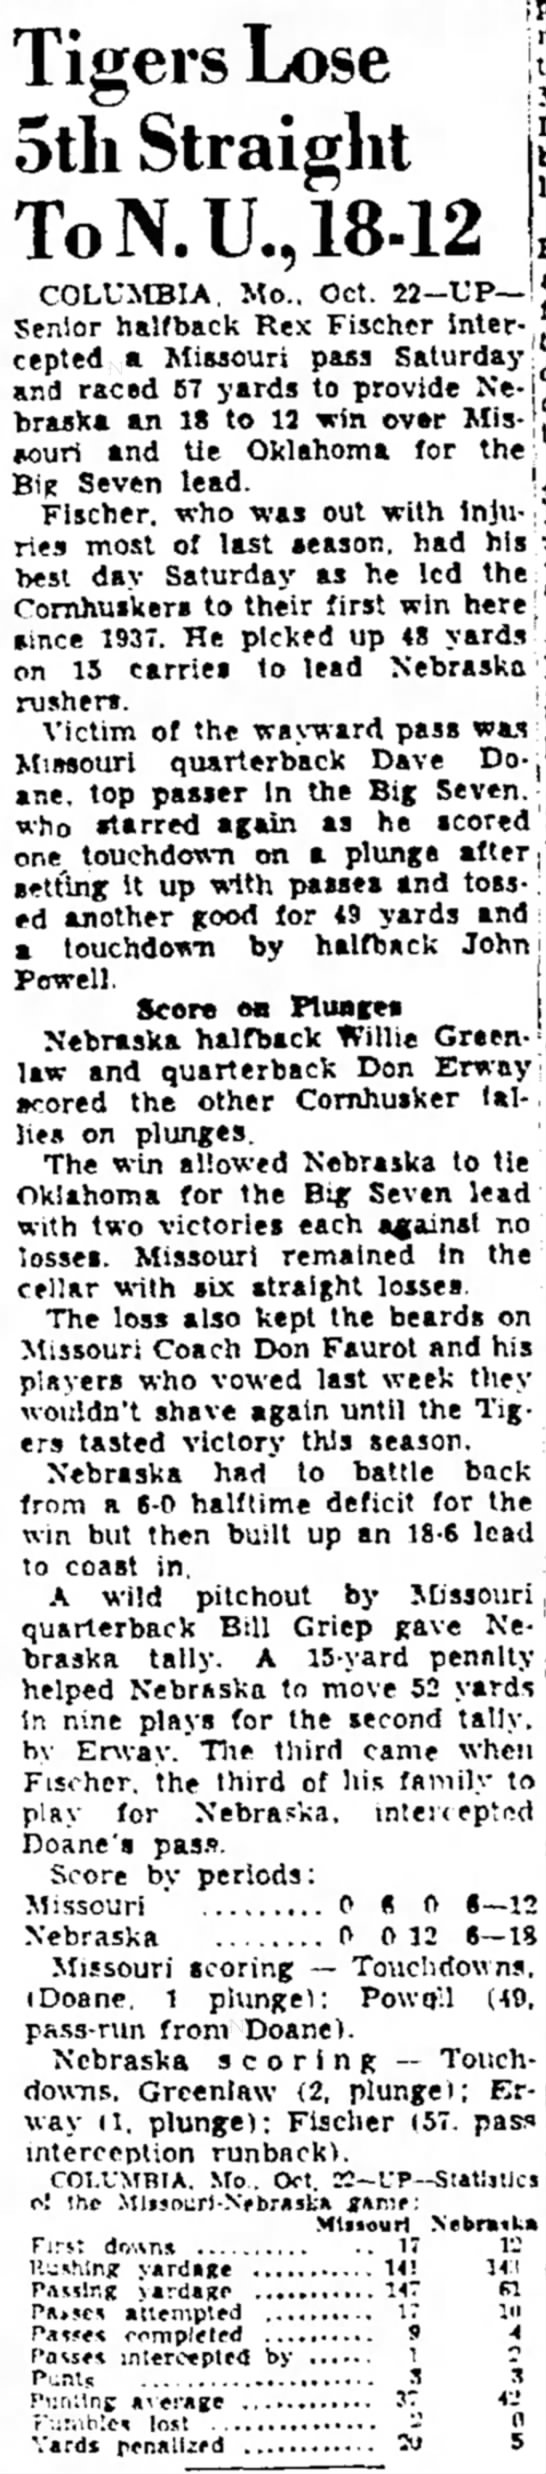 1955 Nebraska-Missouri football, United Press - 